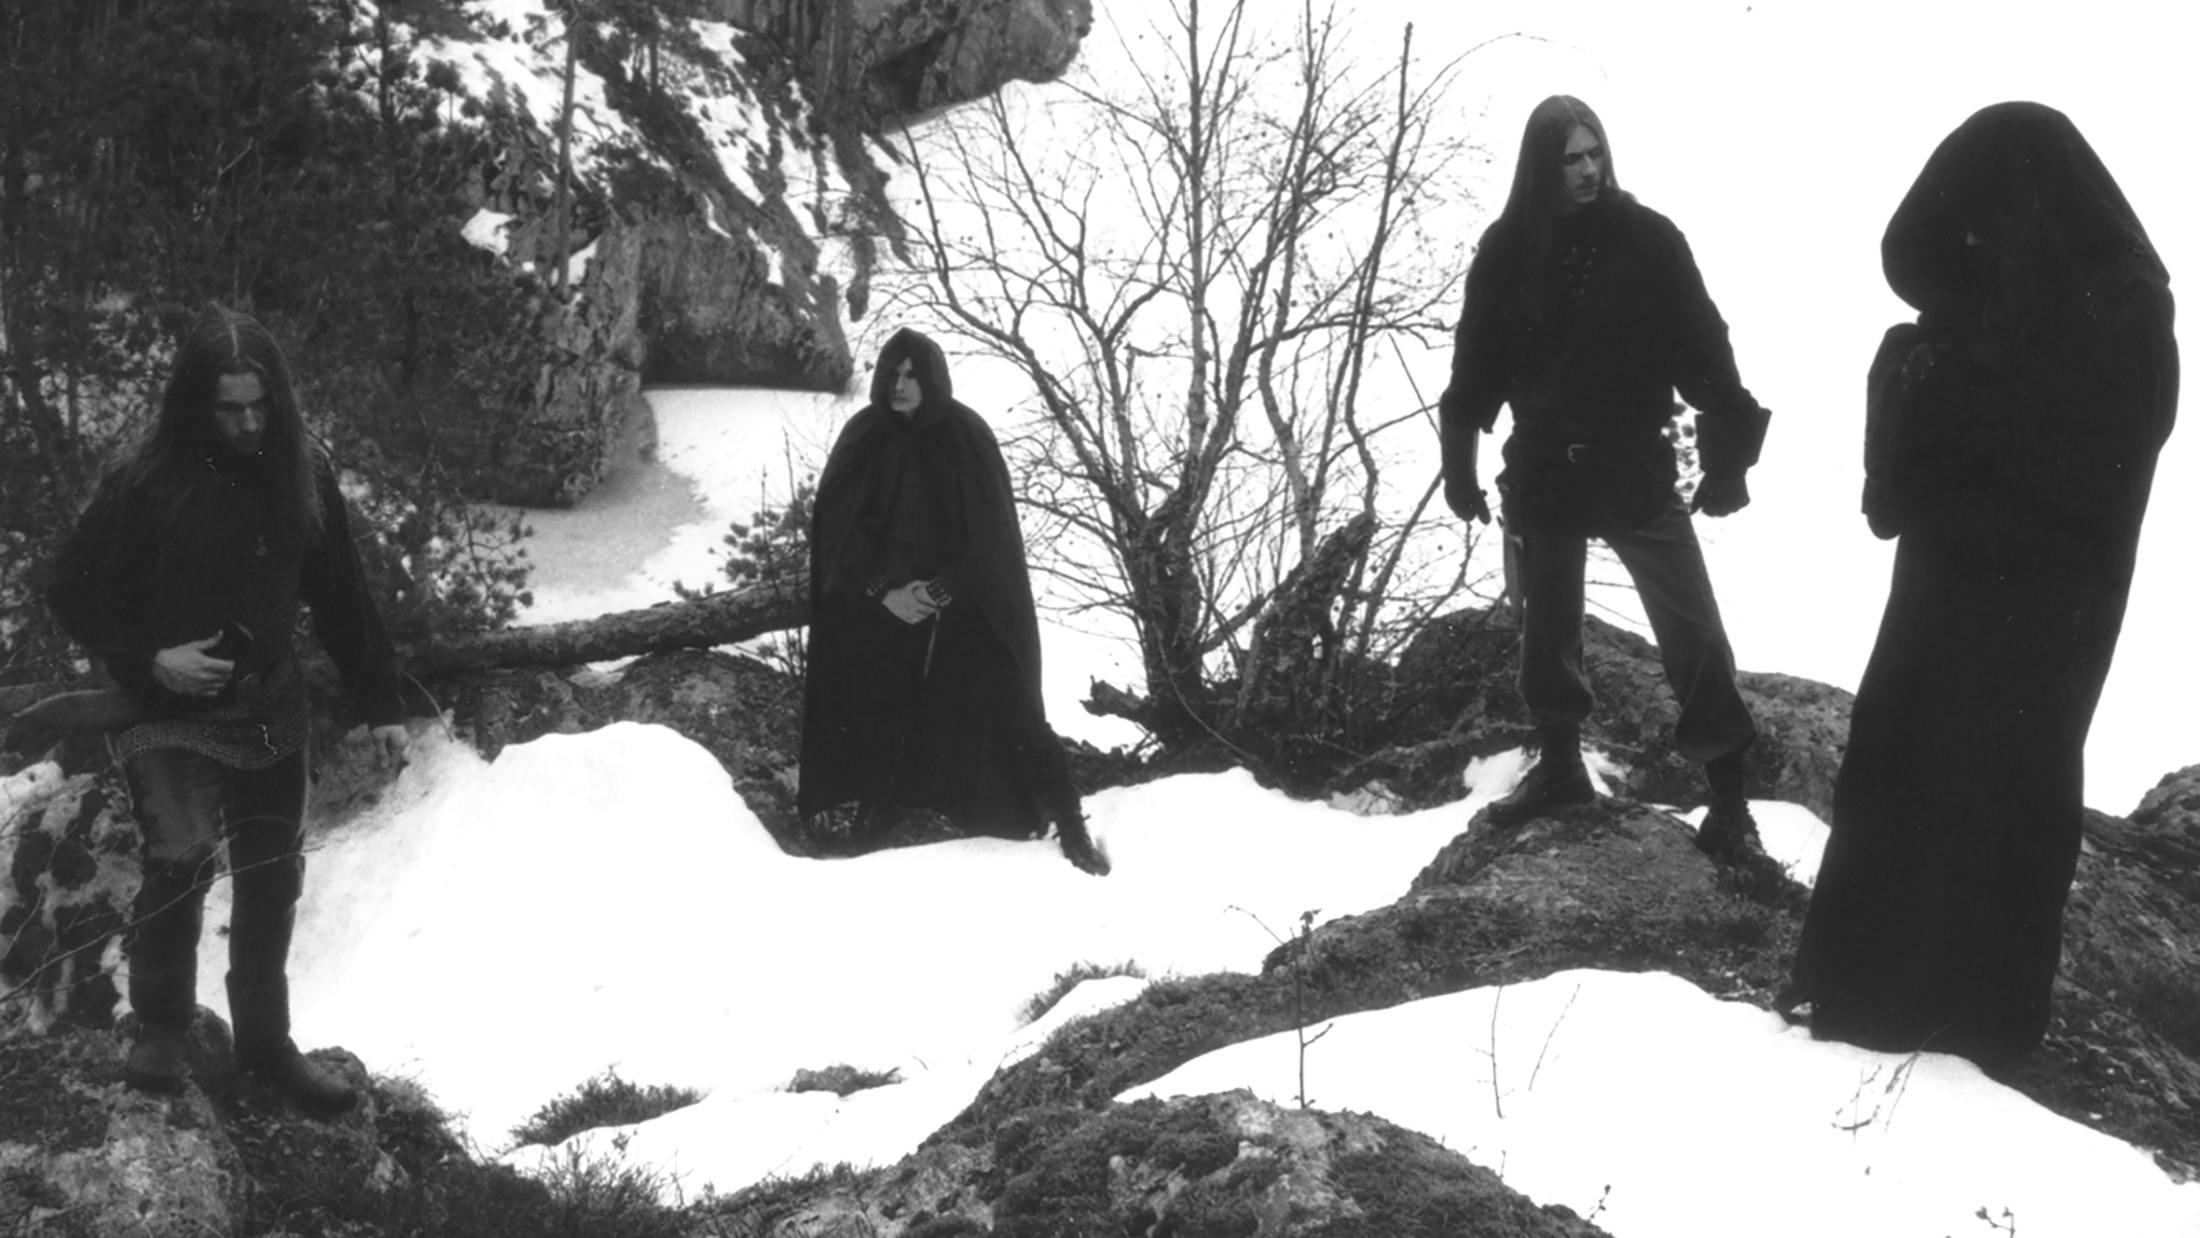 Emperor's Ihsahn Talks Early Years Of Norwegian Black Metal Scene In Our Latest Inside Story Video